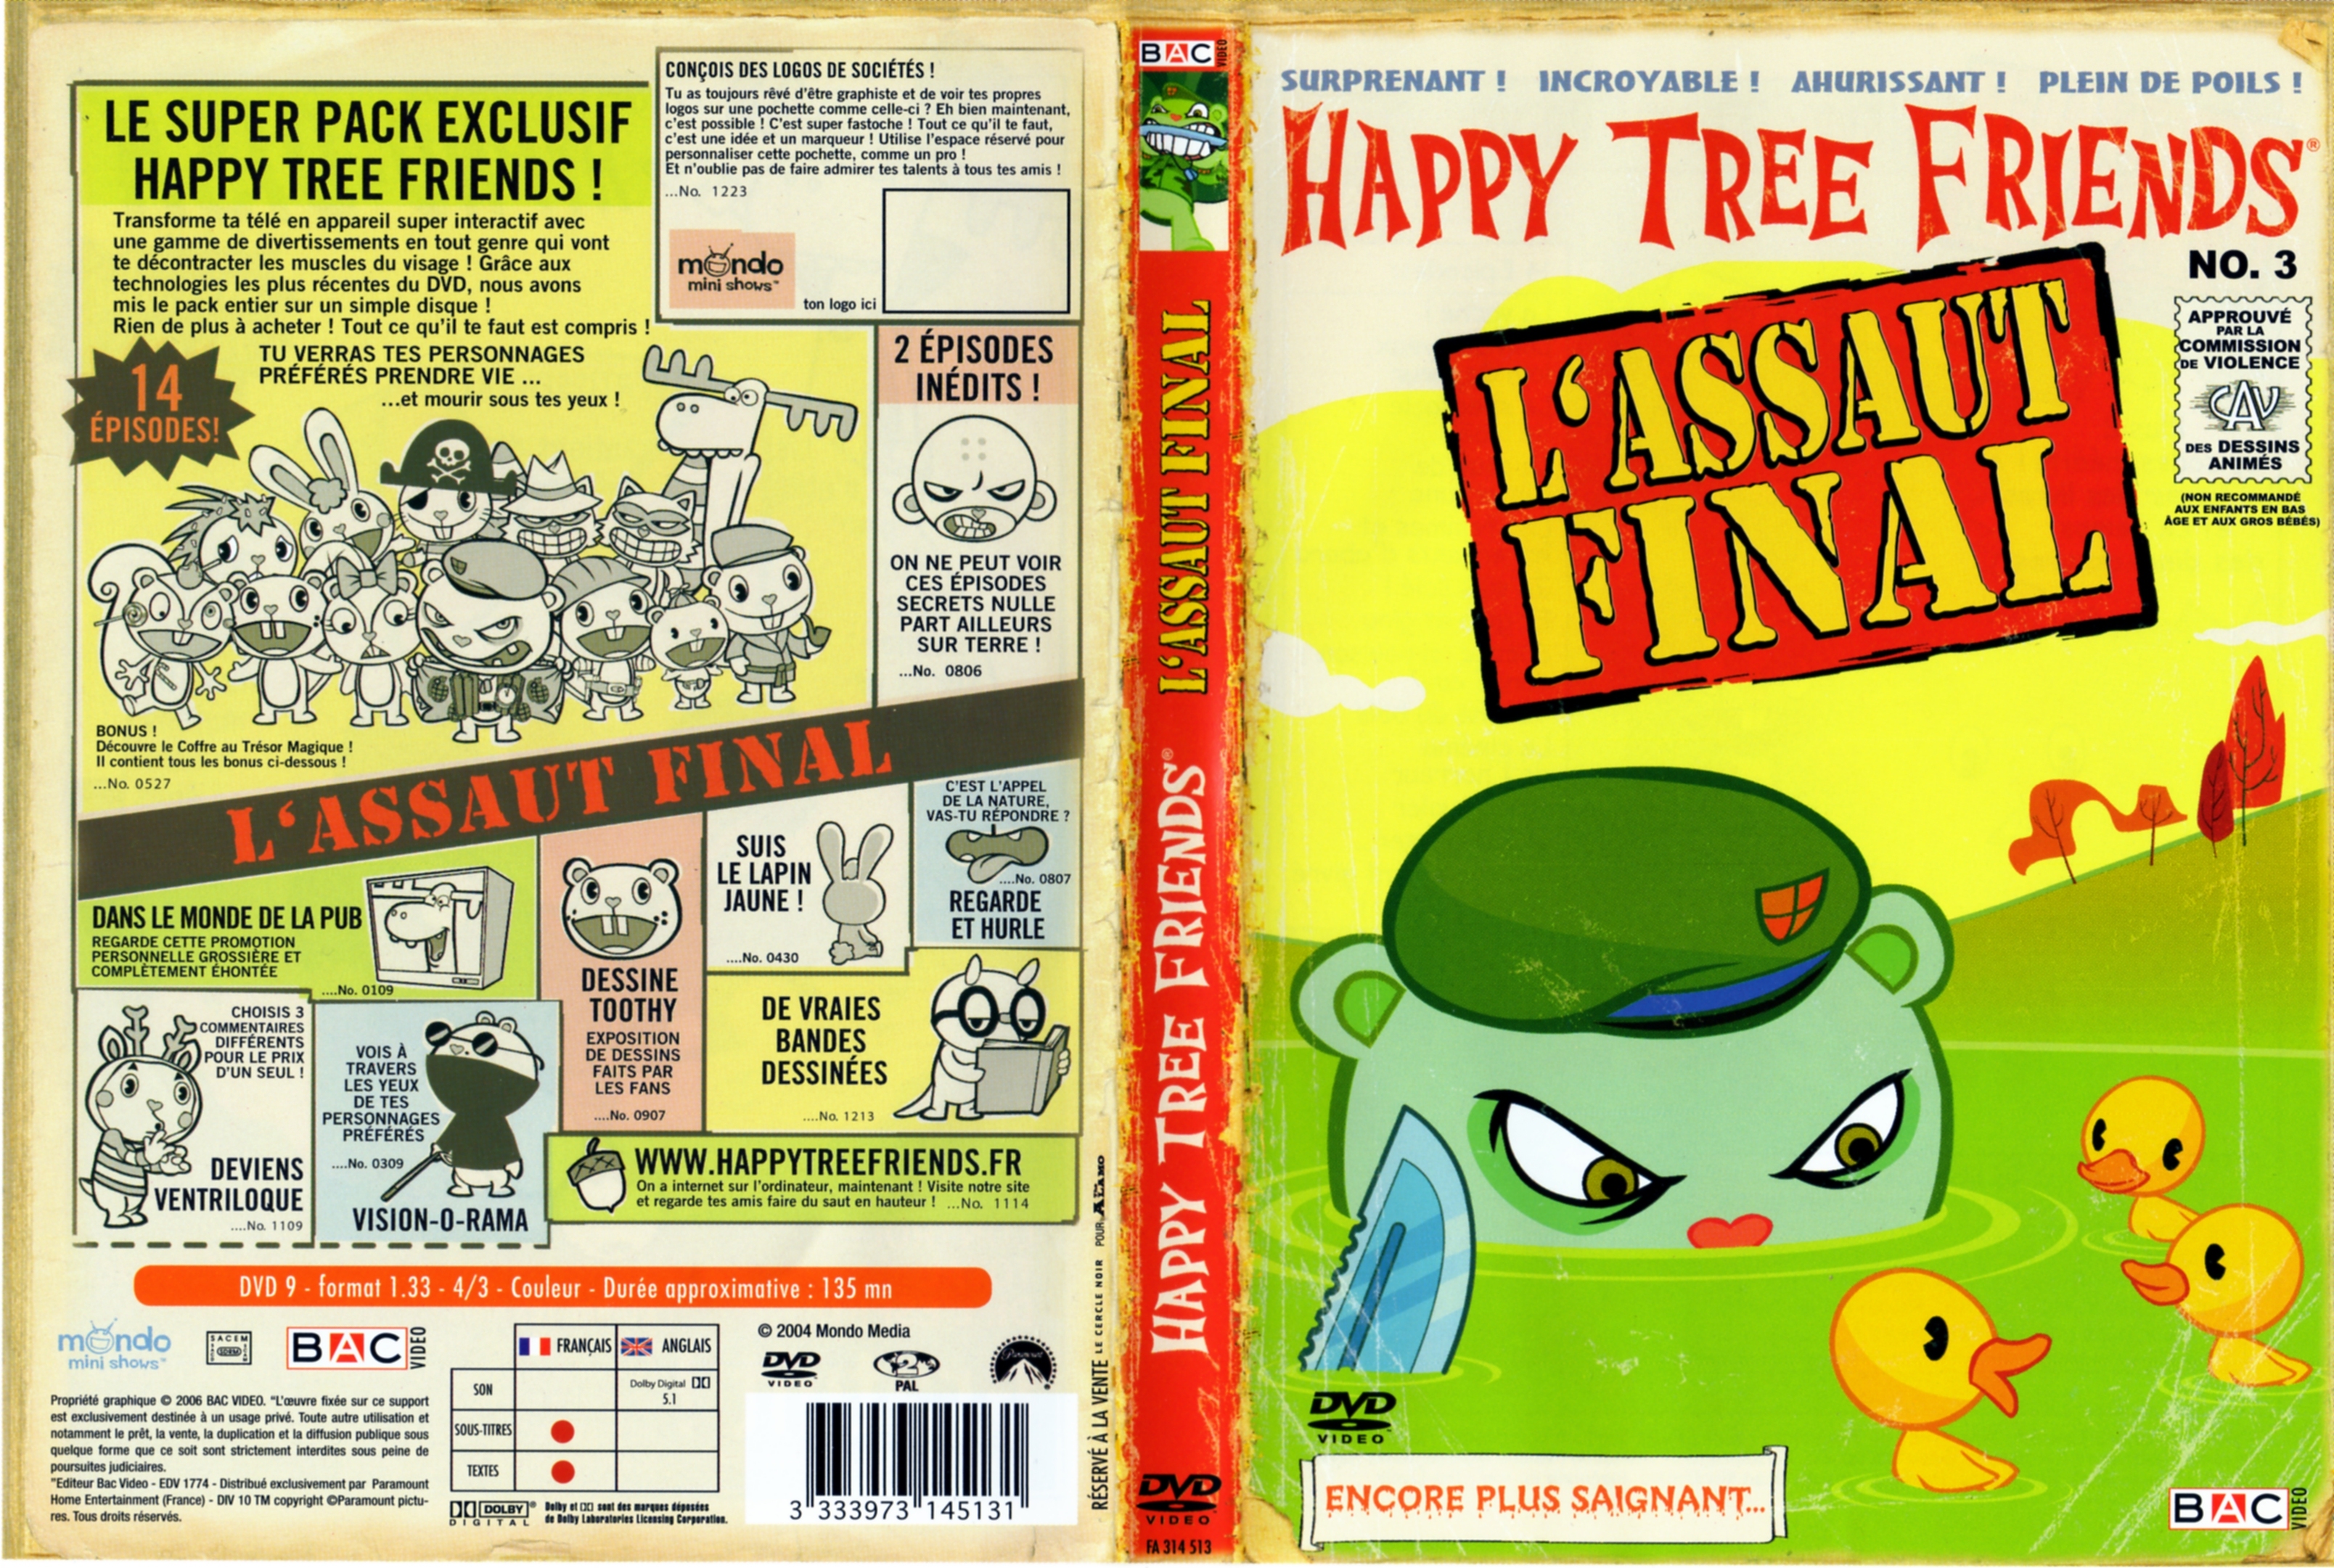 Jaquette DVD Happy tree friends vol 3